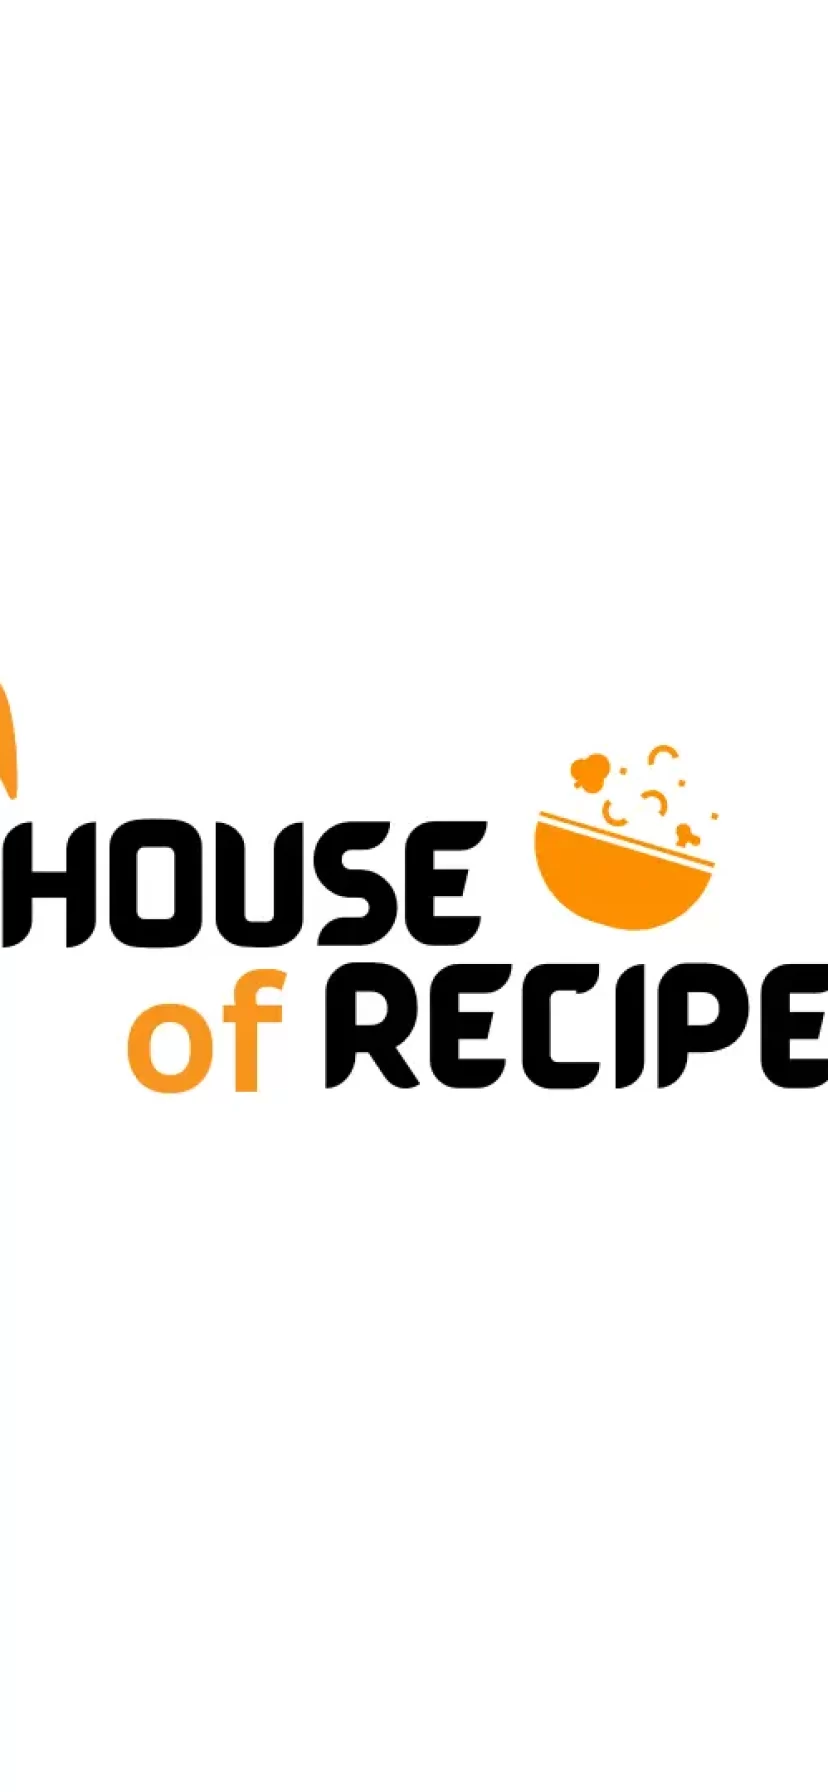 Houseofrecipes.com domain name for sale